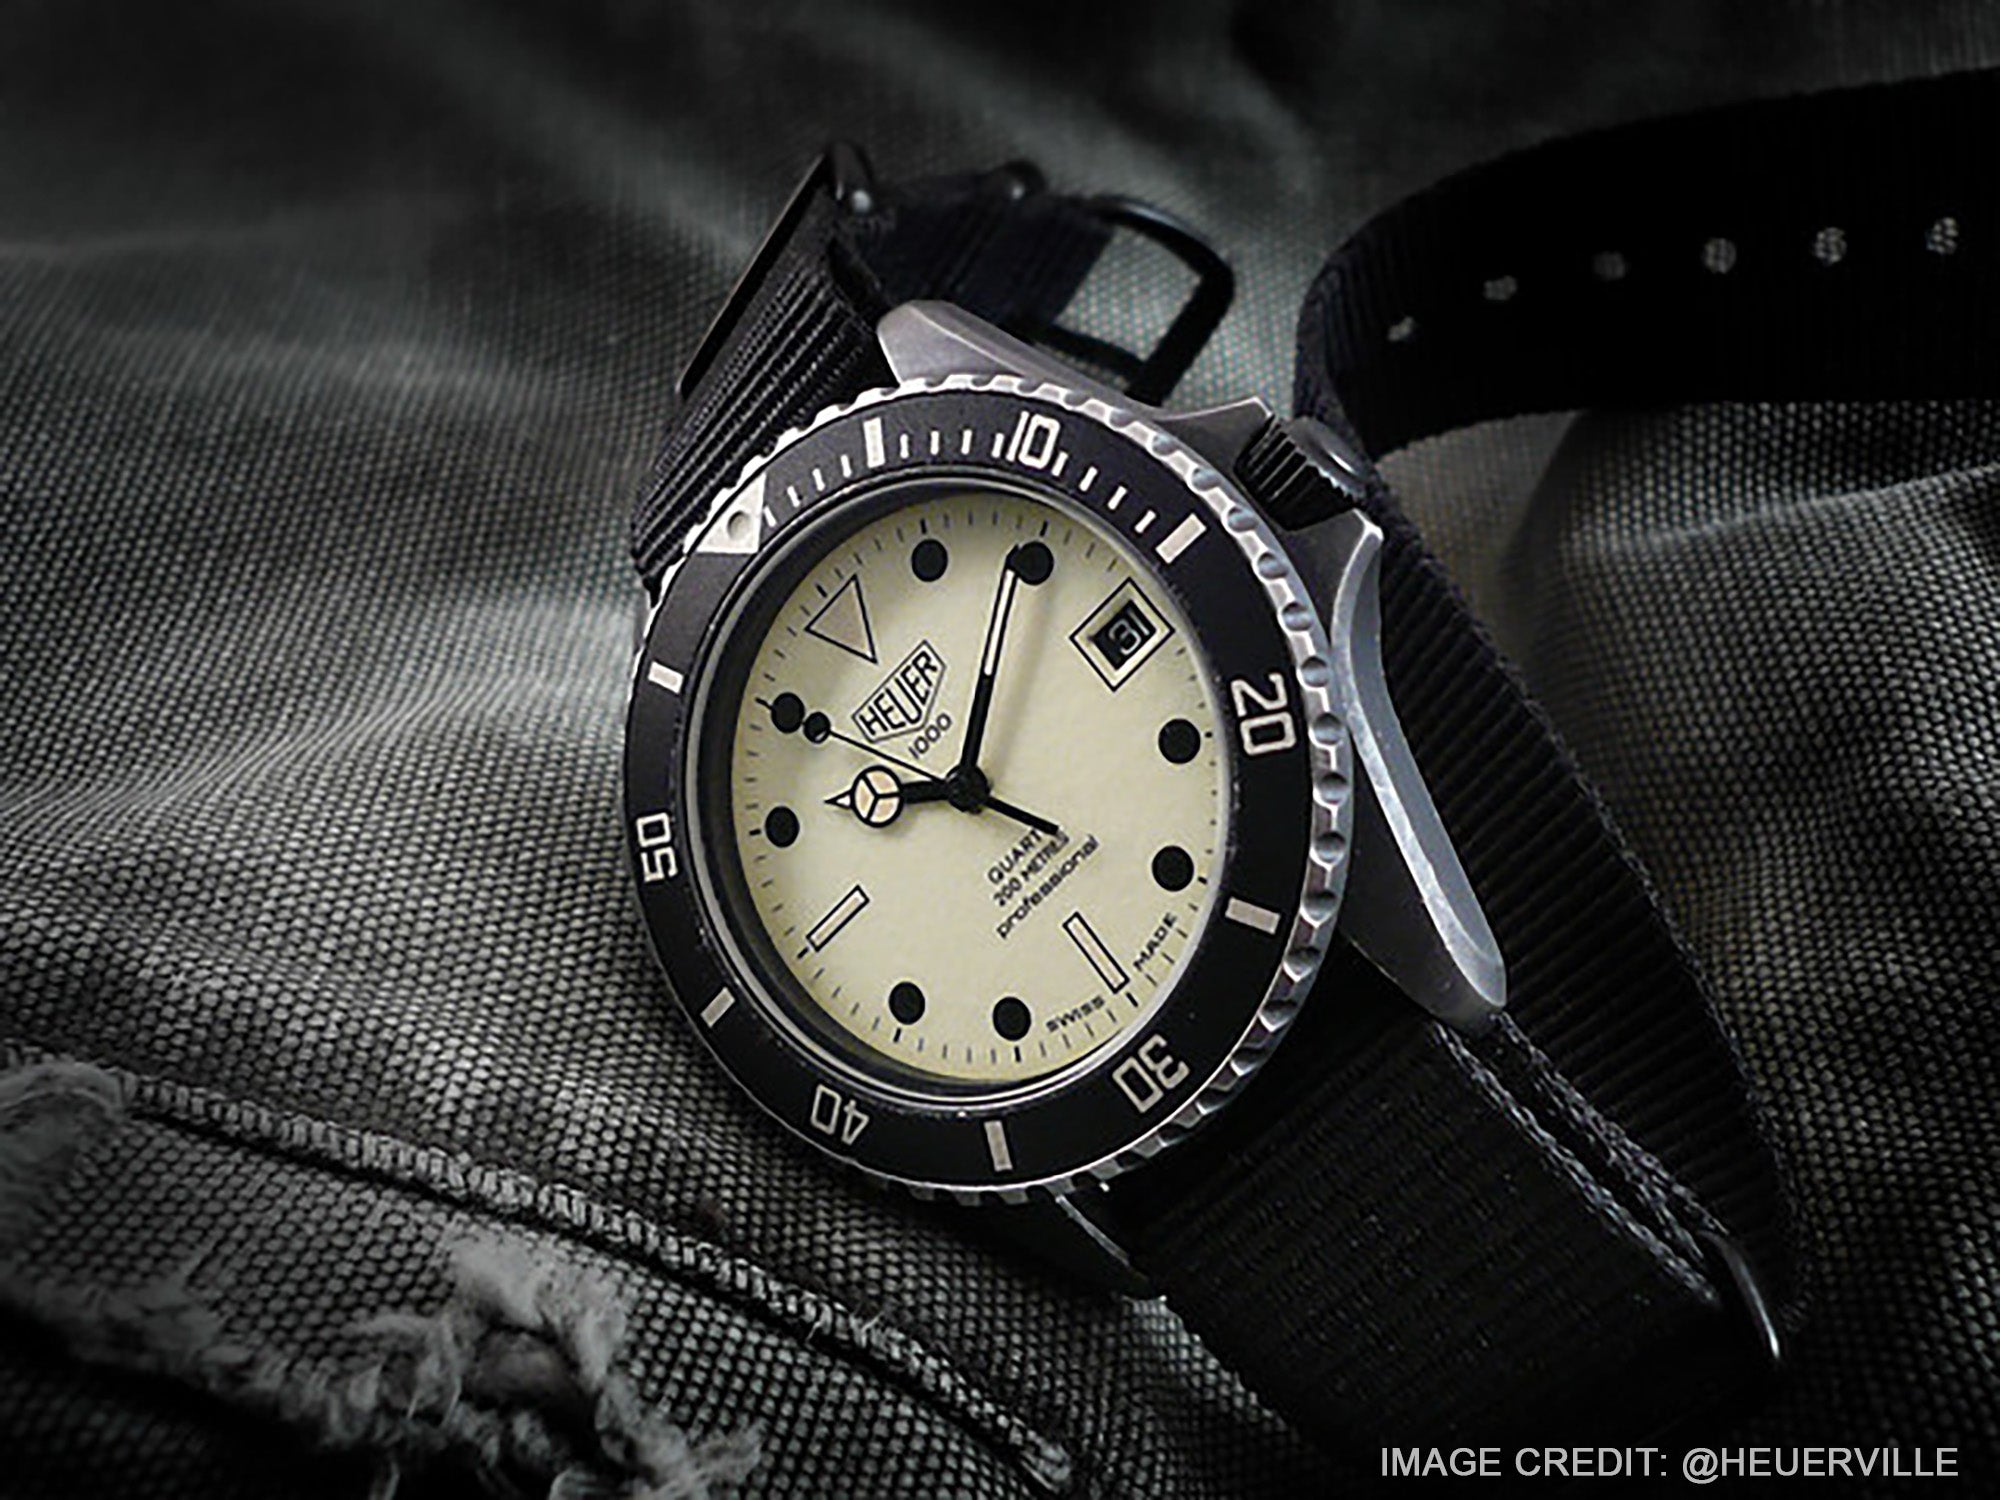 TAG Heuer Professional Night Diver Ref. 980.031 worn by Timothy Dalton